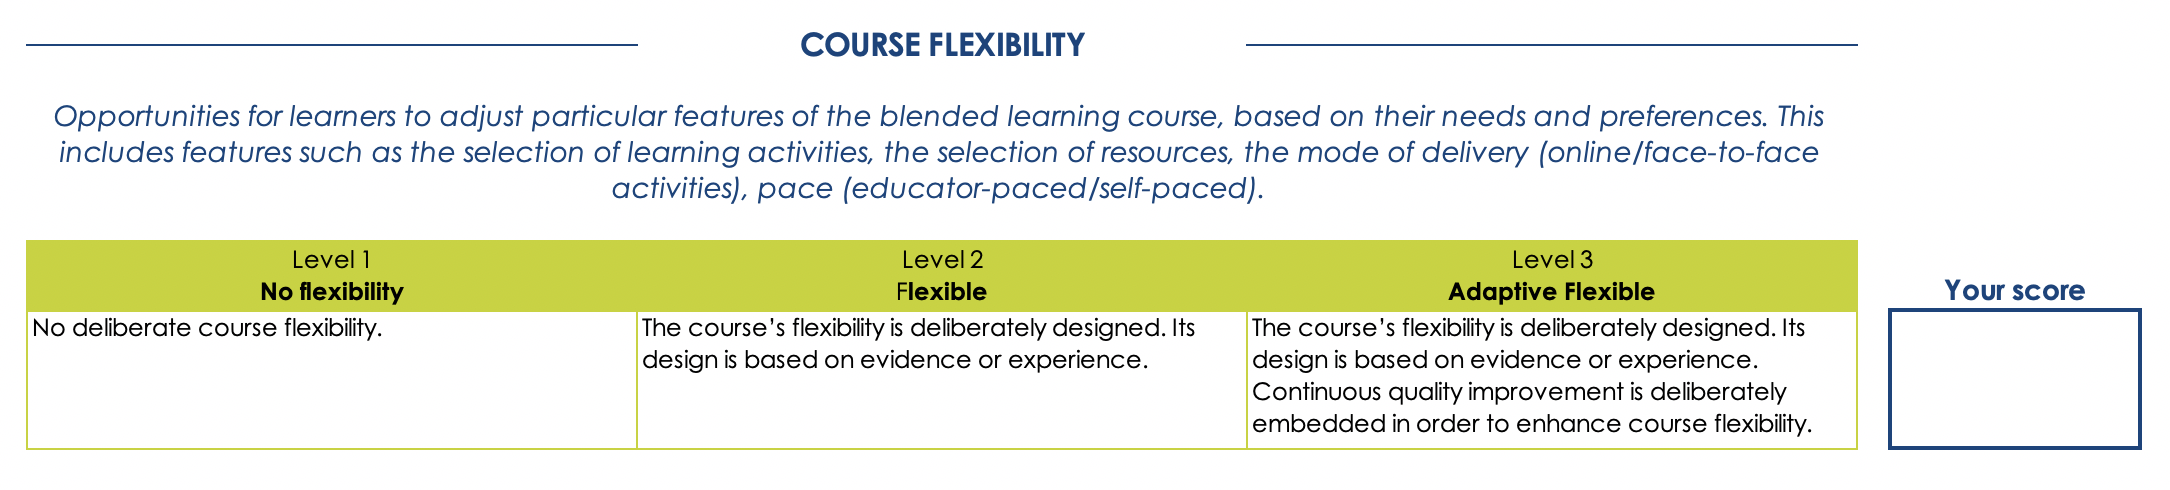 EMEBED Course Flexibility Dimension